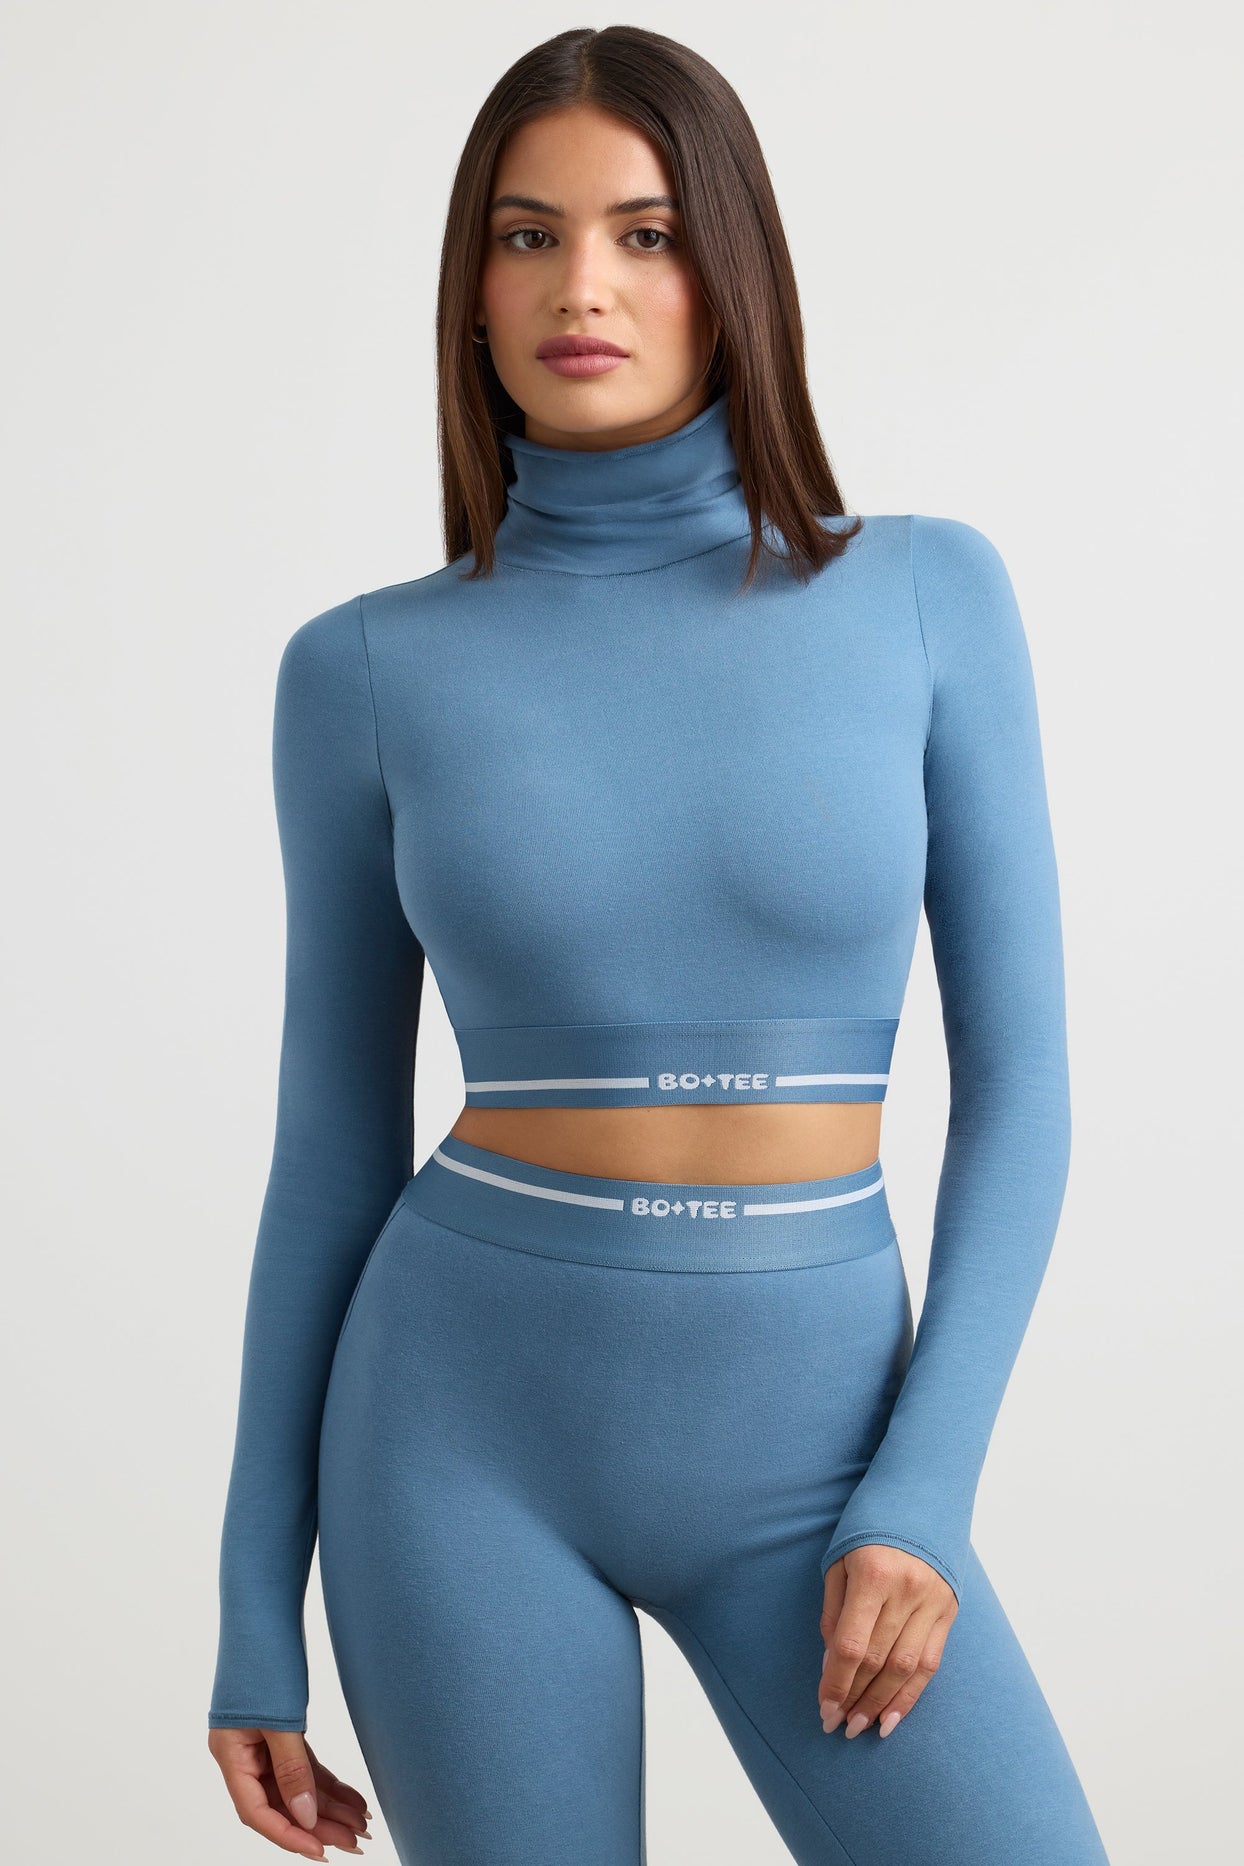 Blue Long Sleeve Top - Backless Crop Top - Women's Top